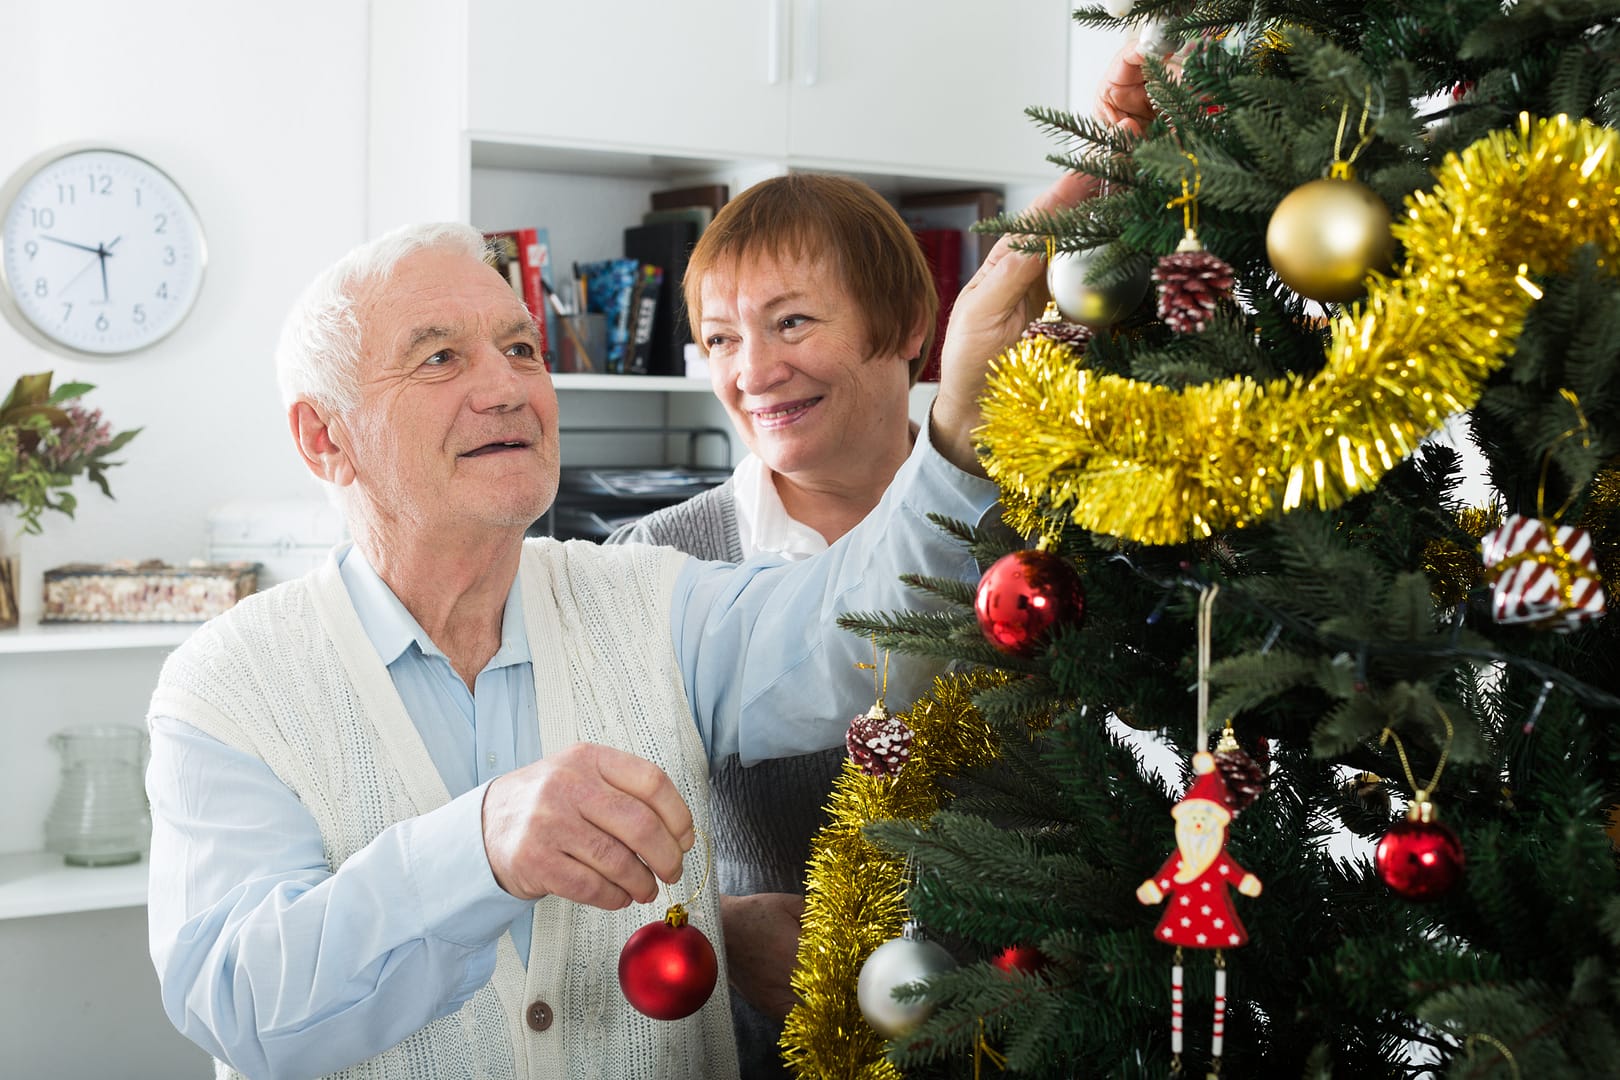 stock photo of older gentleman decorating Christmas tree